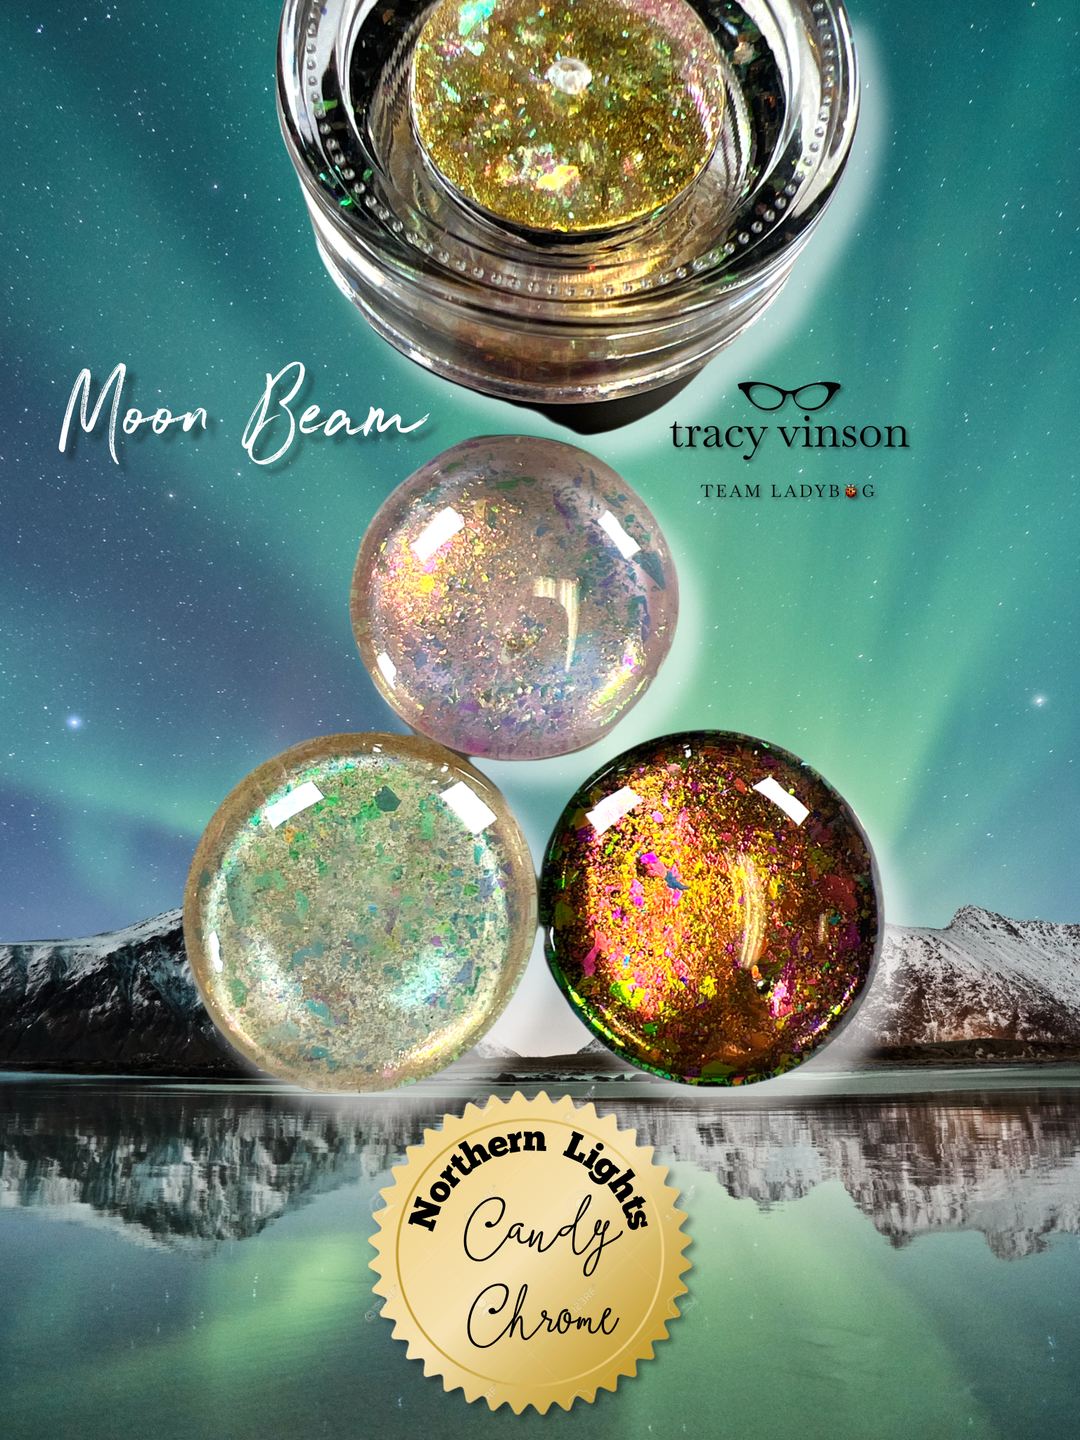 MM - Northern Lights Candy Chrome -- "Moon Beam"